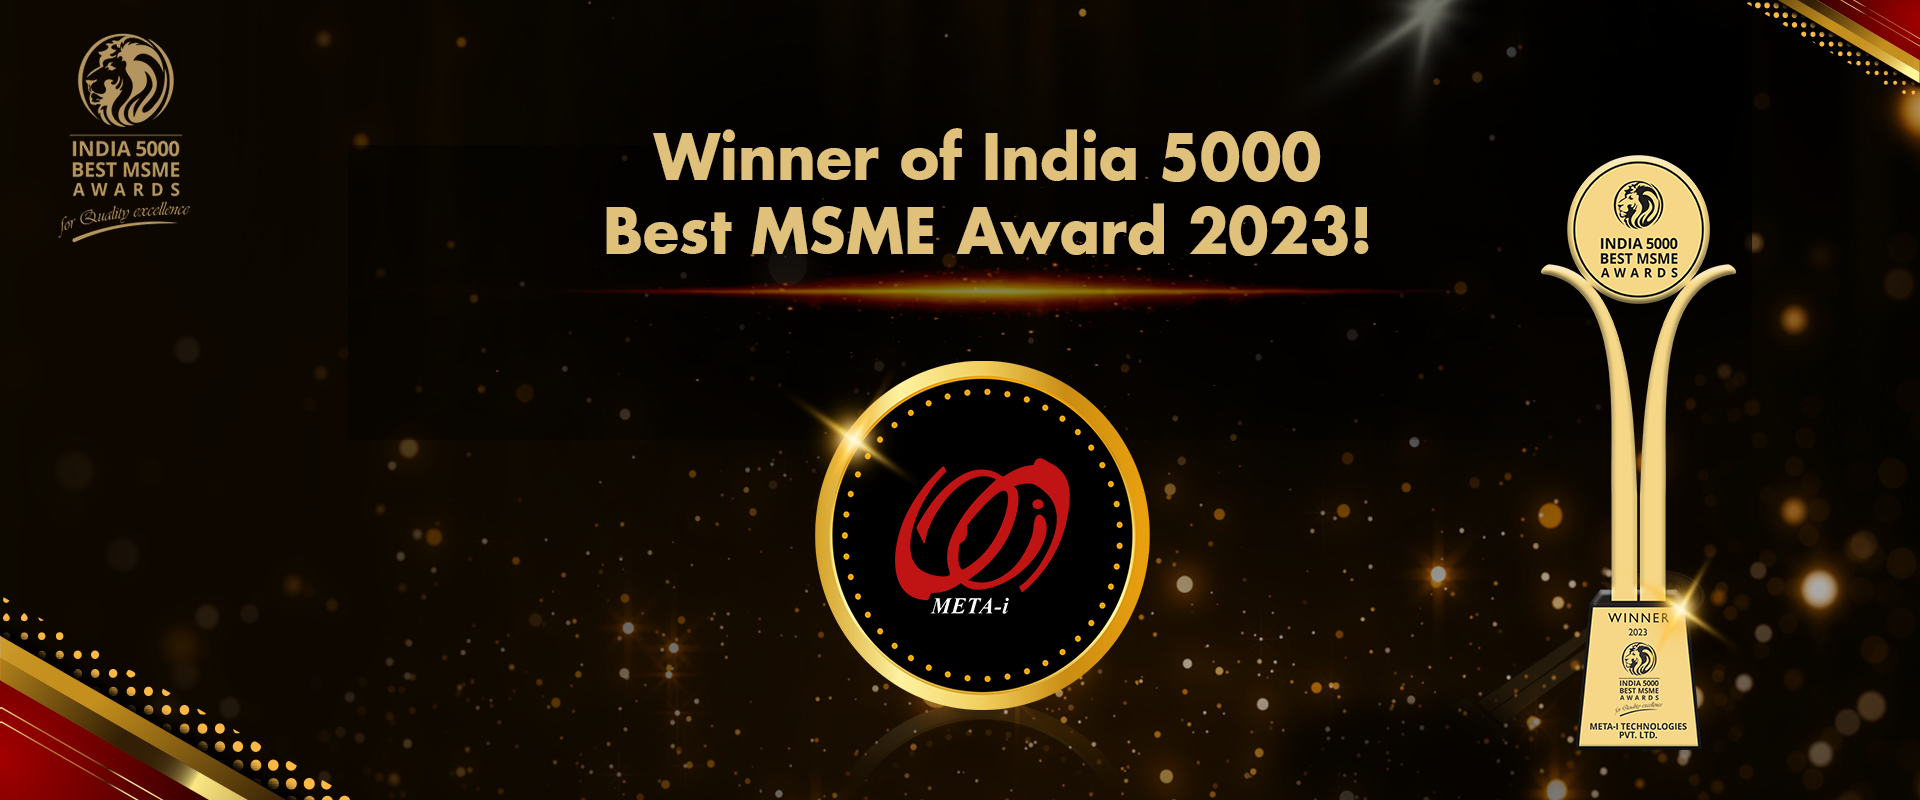 meta-i-technologies-bags-india-5000-best-msme-award-2023